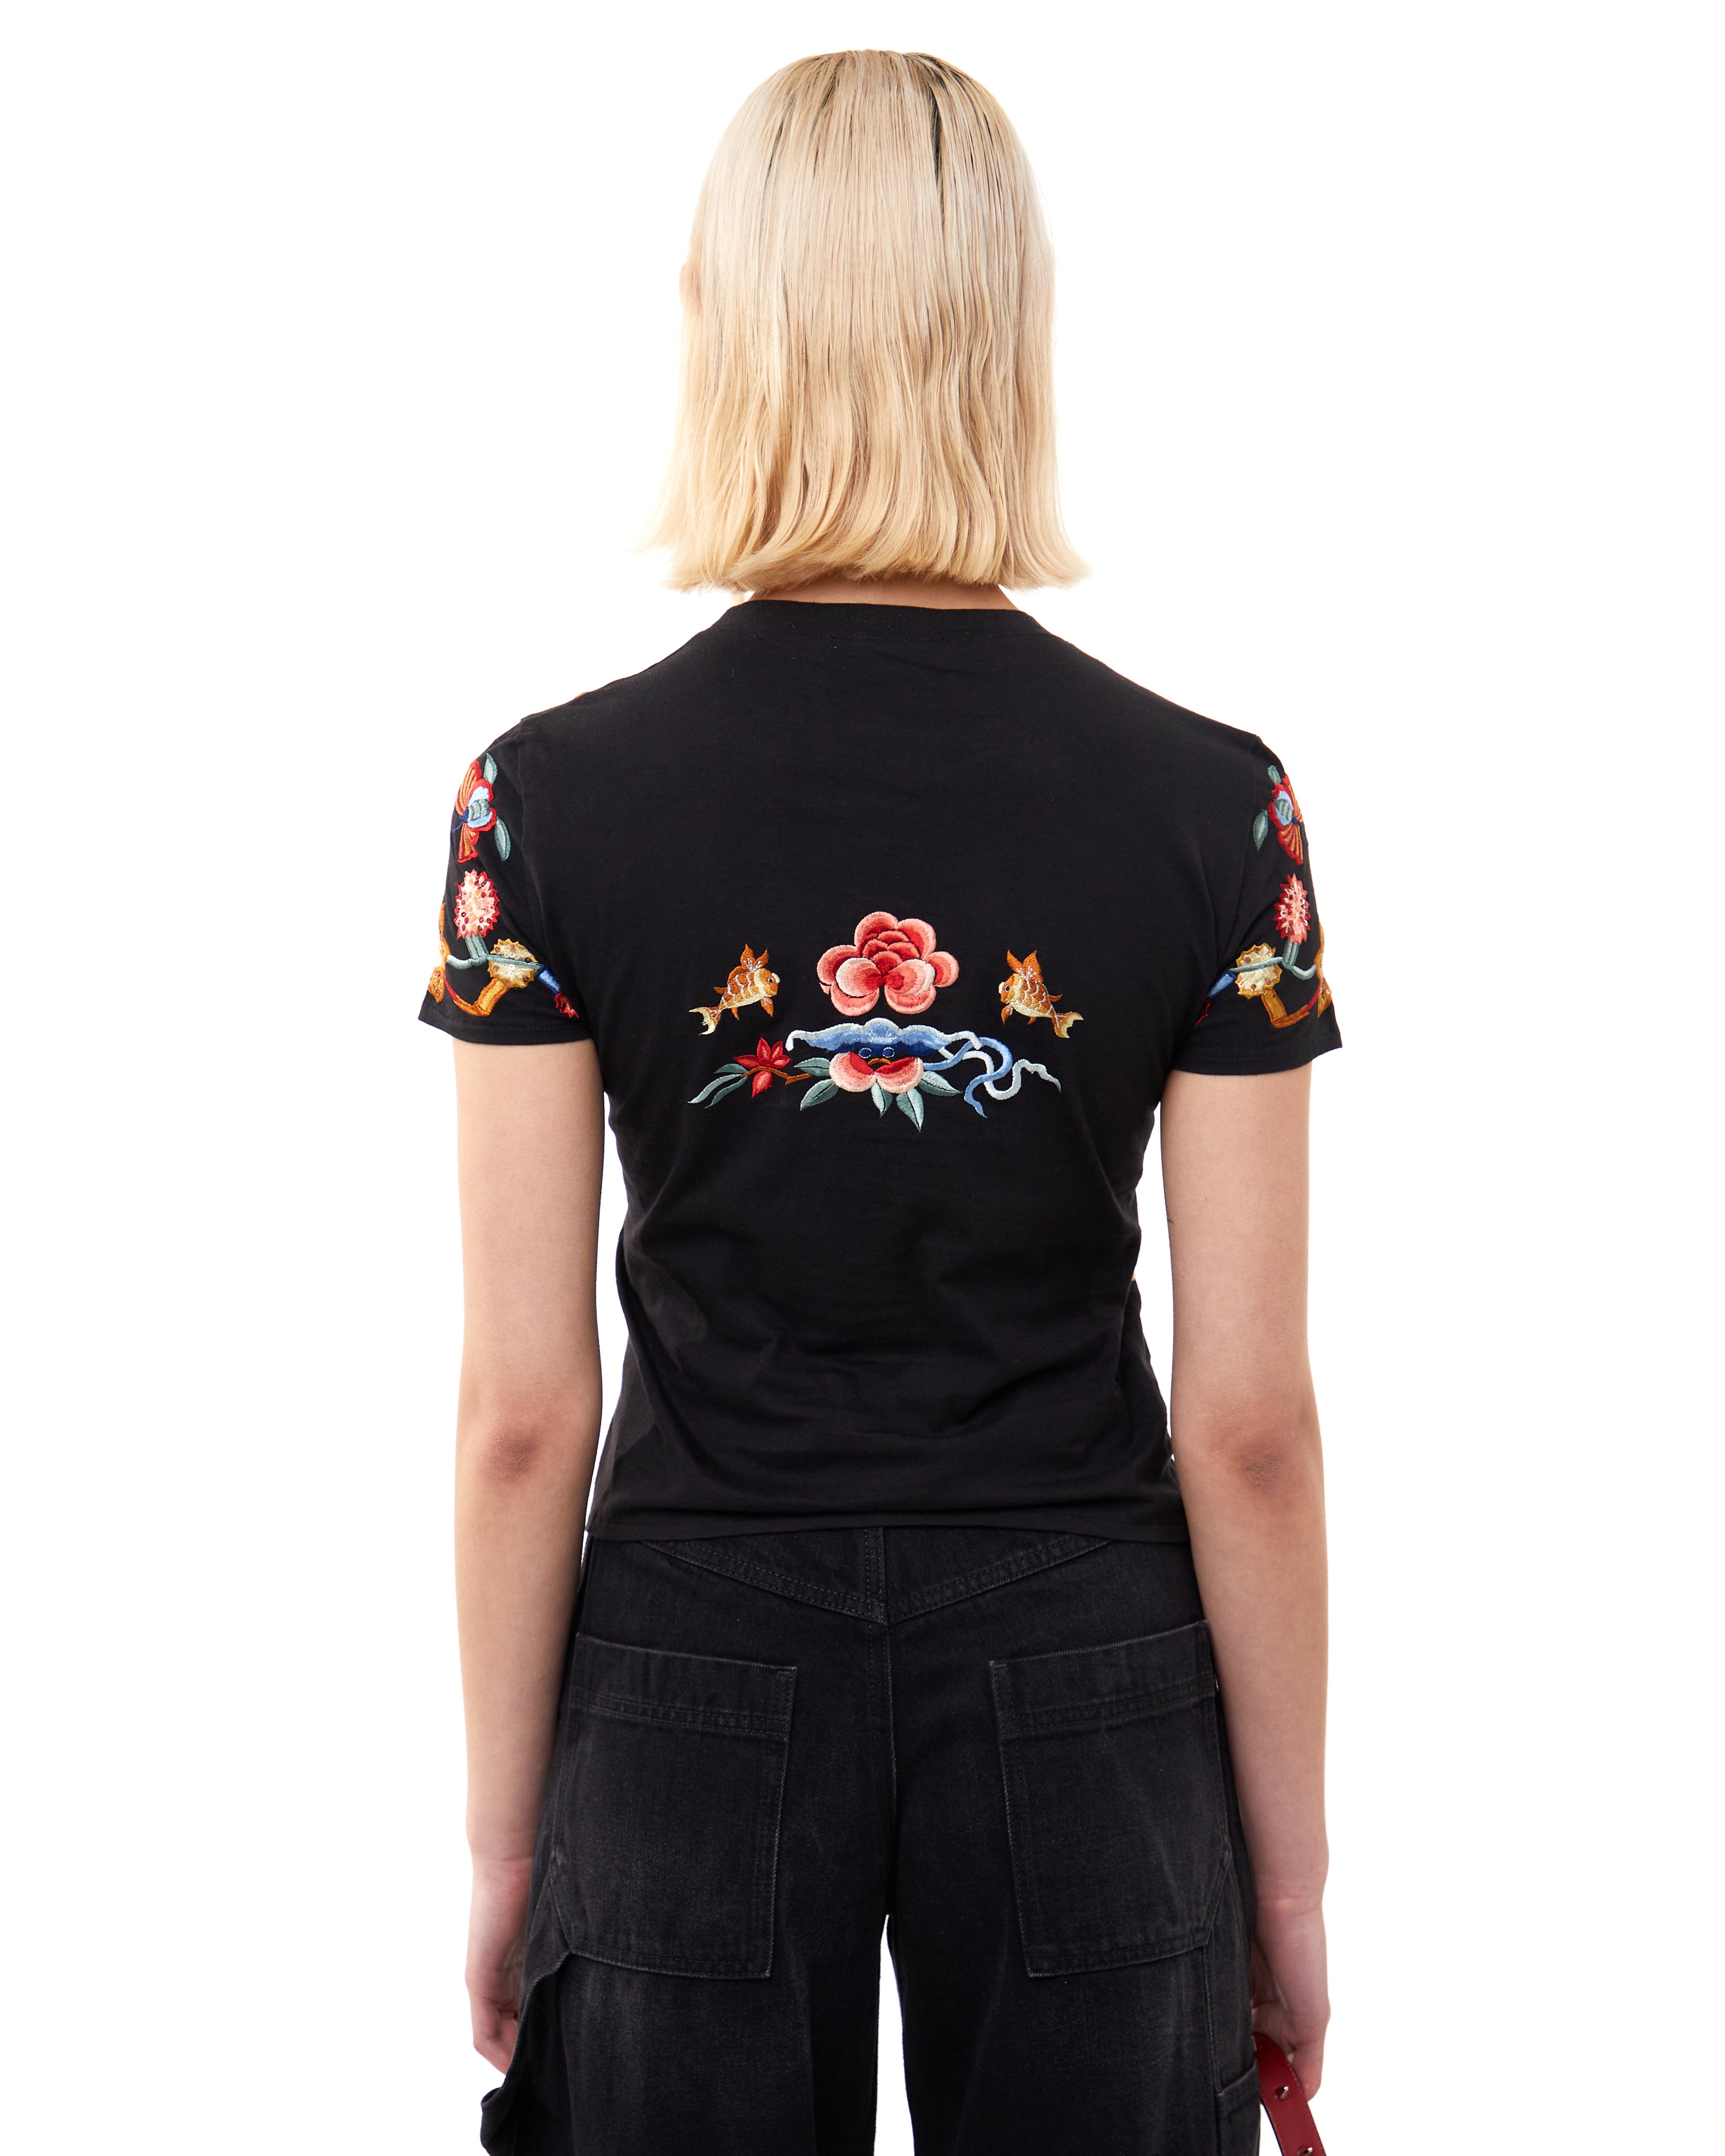 Dior Mens Sorayama T Shirt Size Large Black Red Cotton Floral Flower Robot  Print  eBay